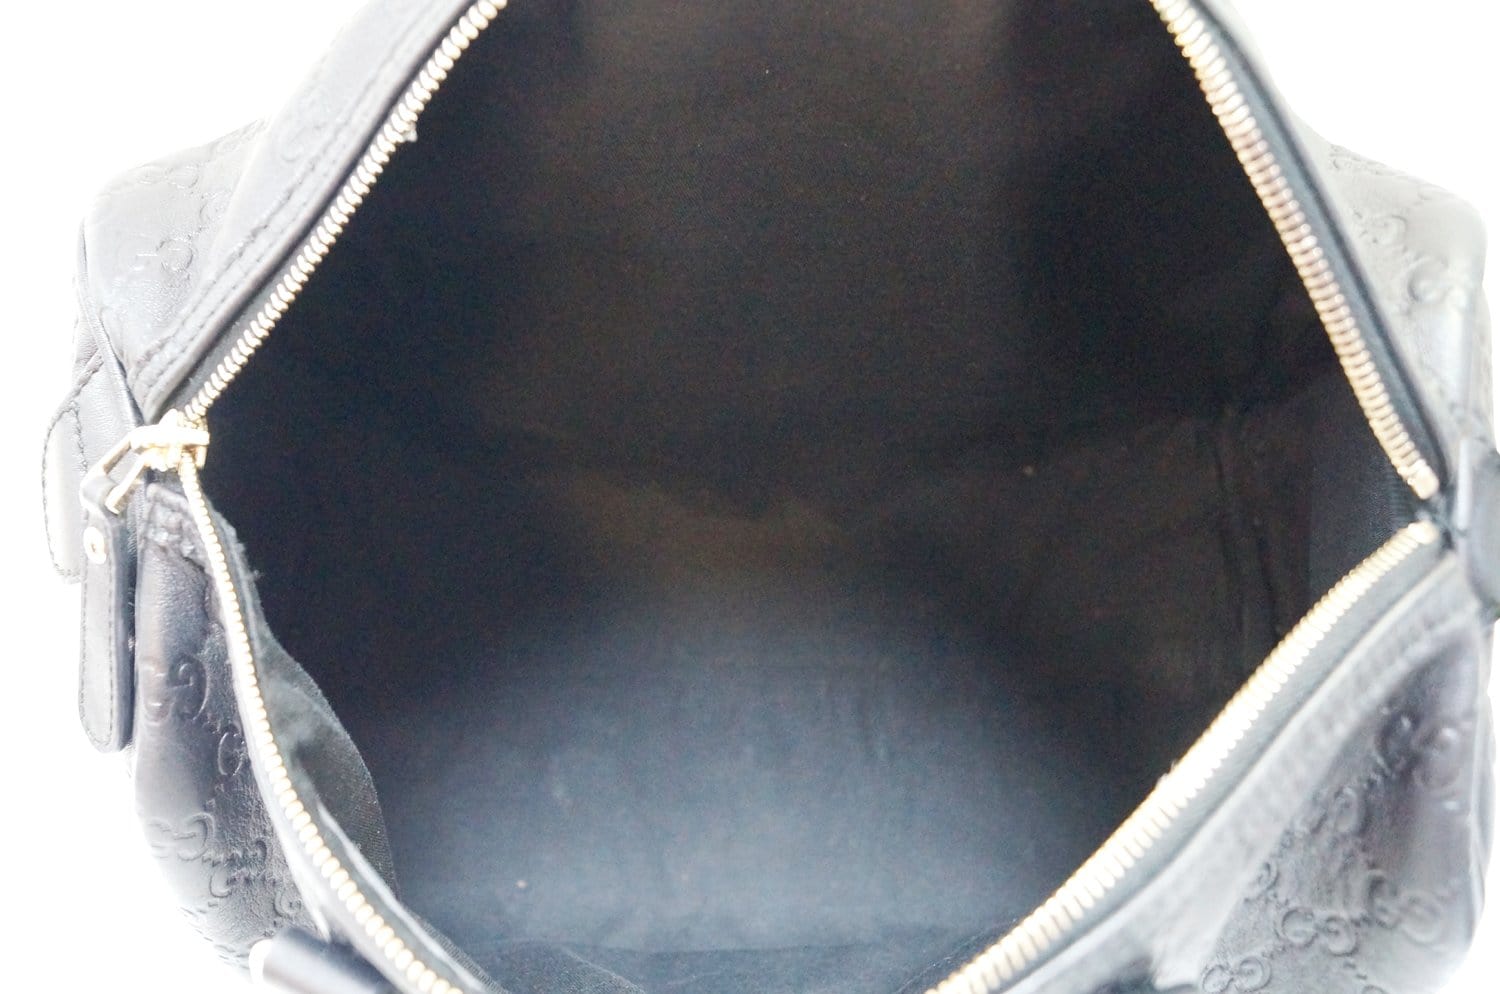 Boston leather handbag Gucci Black in Leather - 30228175